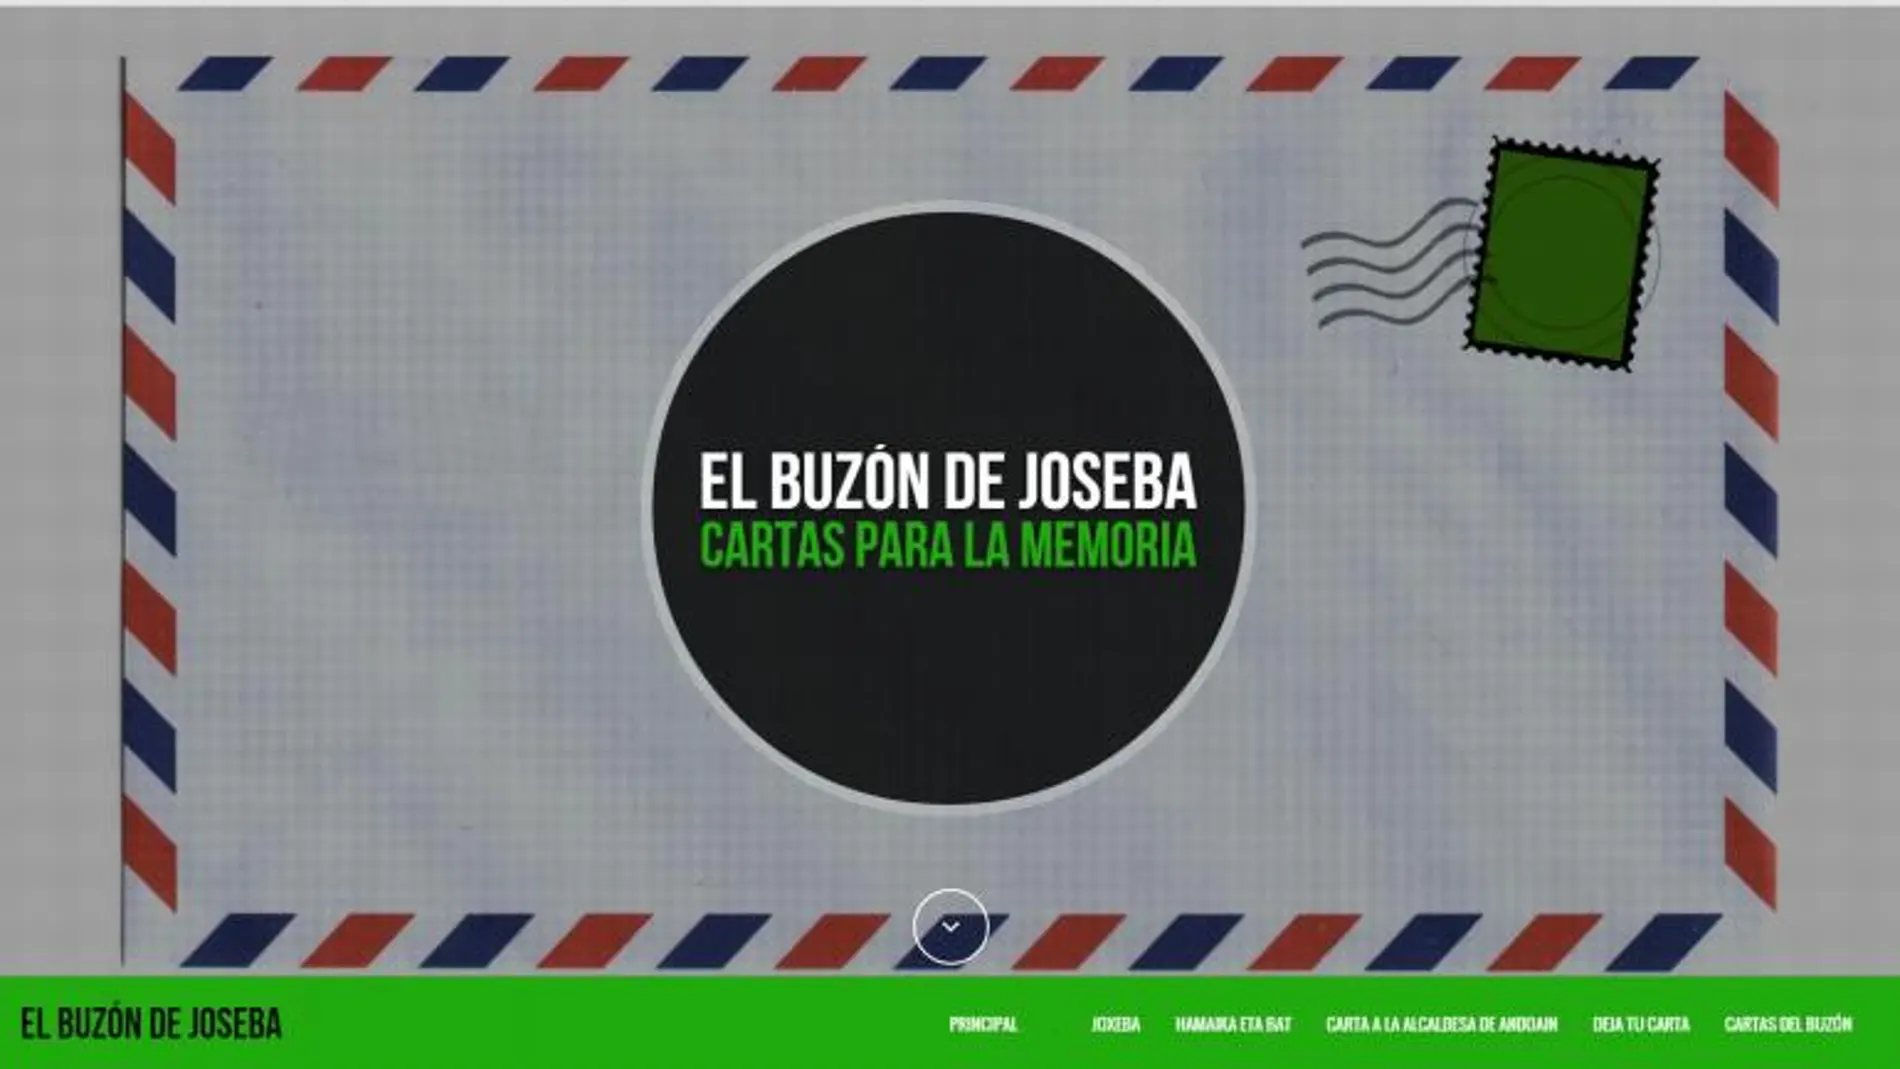 Imagen de la web www.elbuzondejoseba.com